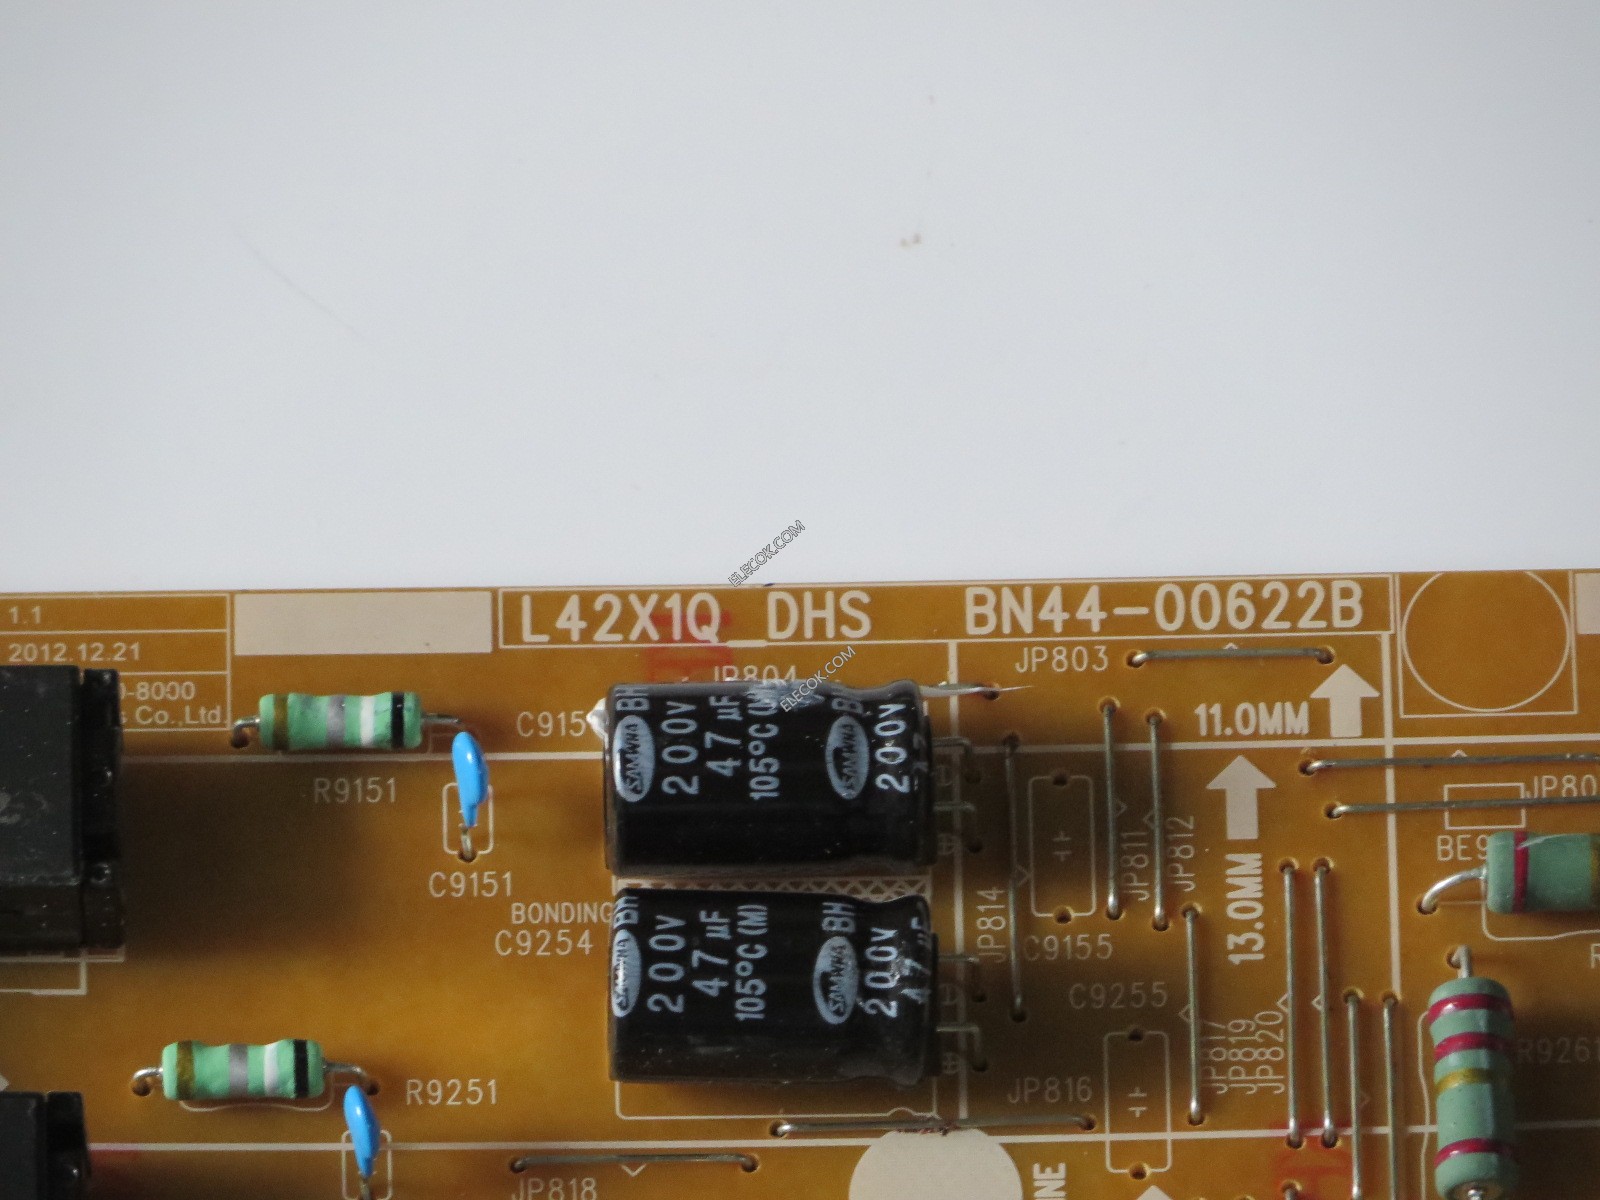 Details about  / Power Board Bn44-00622b L42x1q/_dhs Rev:1.3 For Un40f6400a Spot